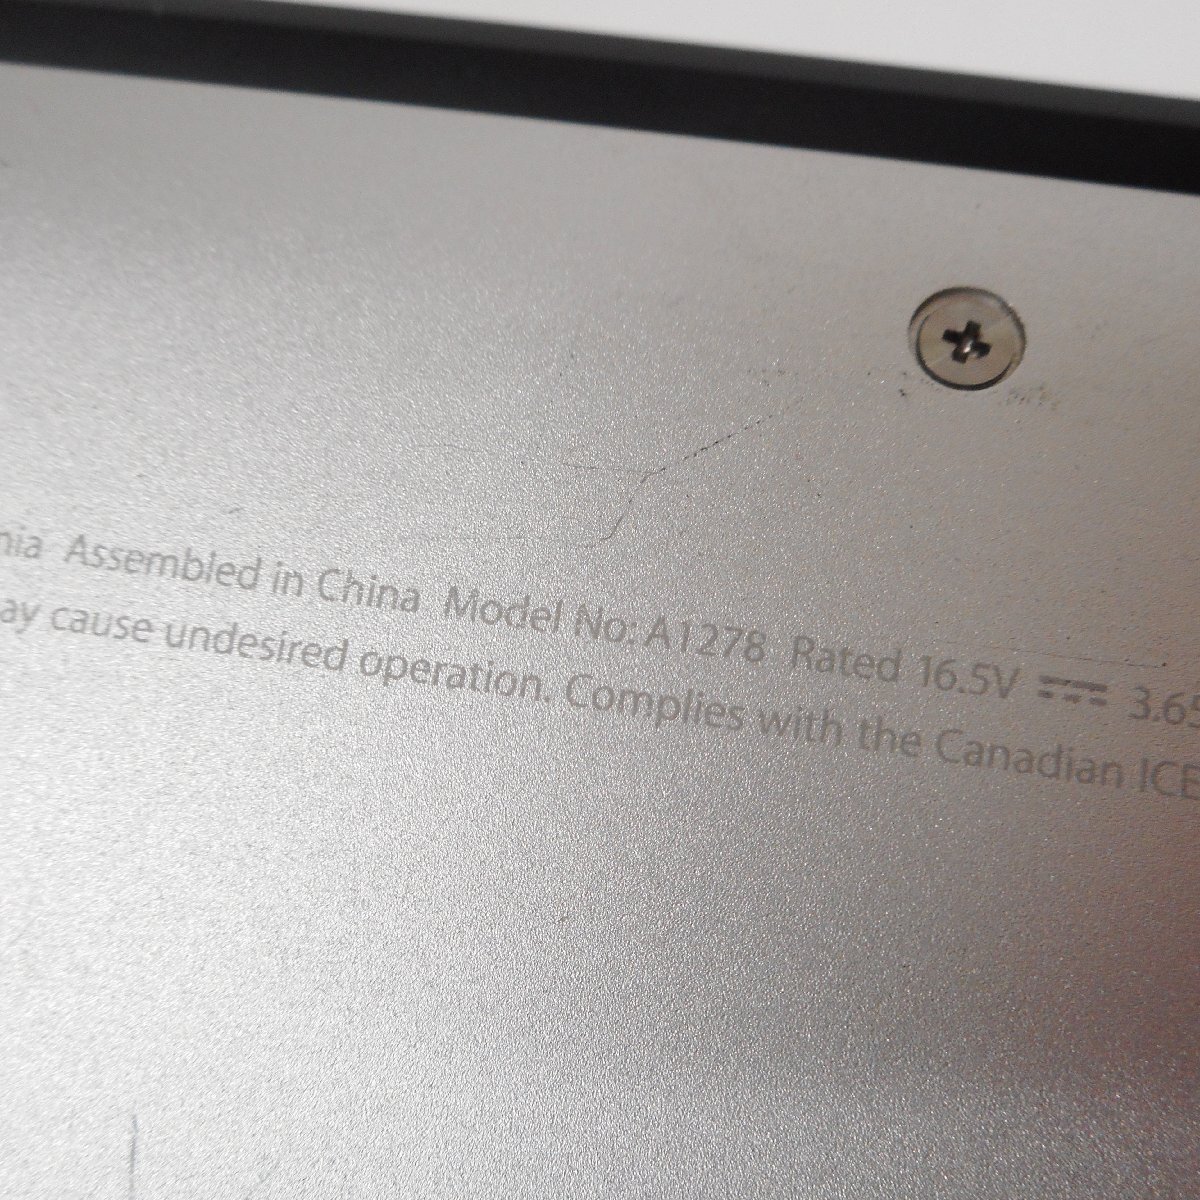 ID286 Apple Apple laptop A1278 Macbook Pro Junk 